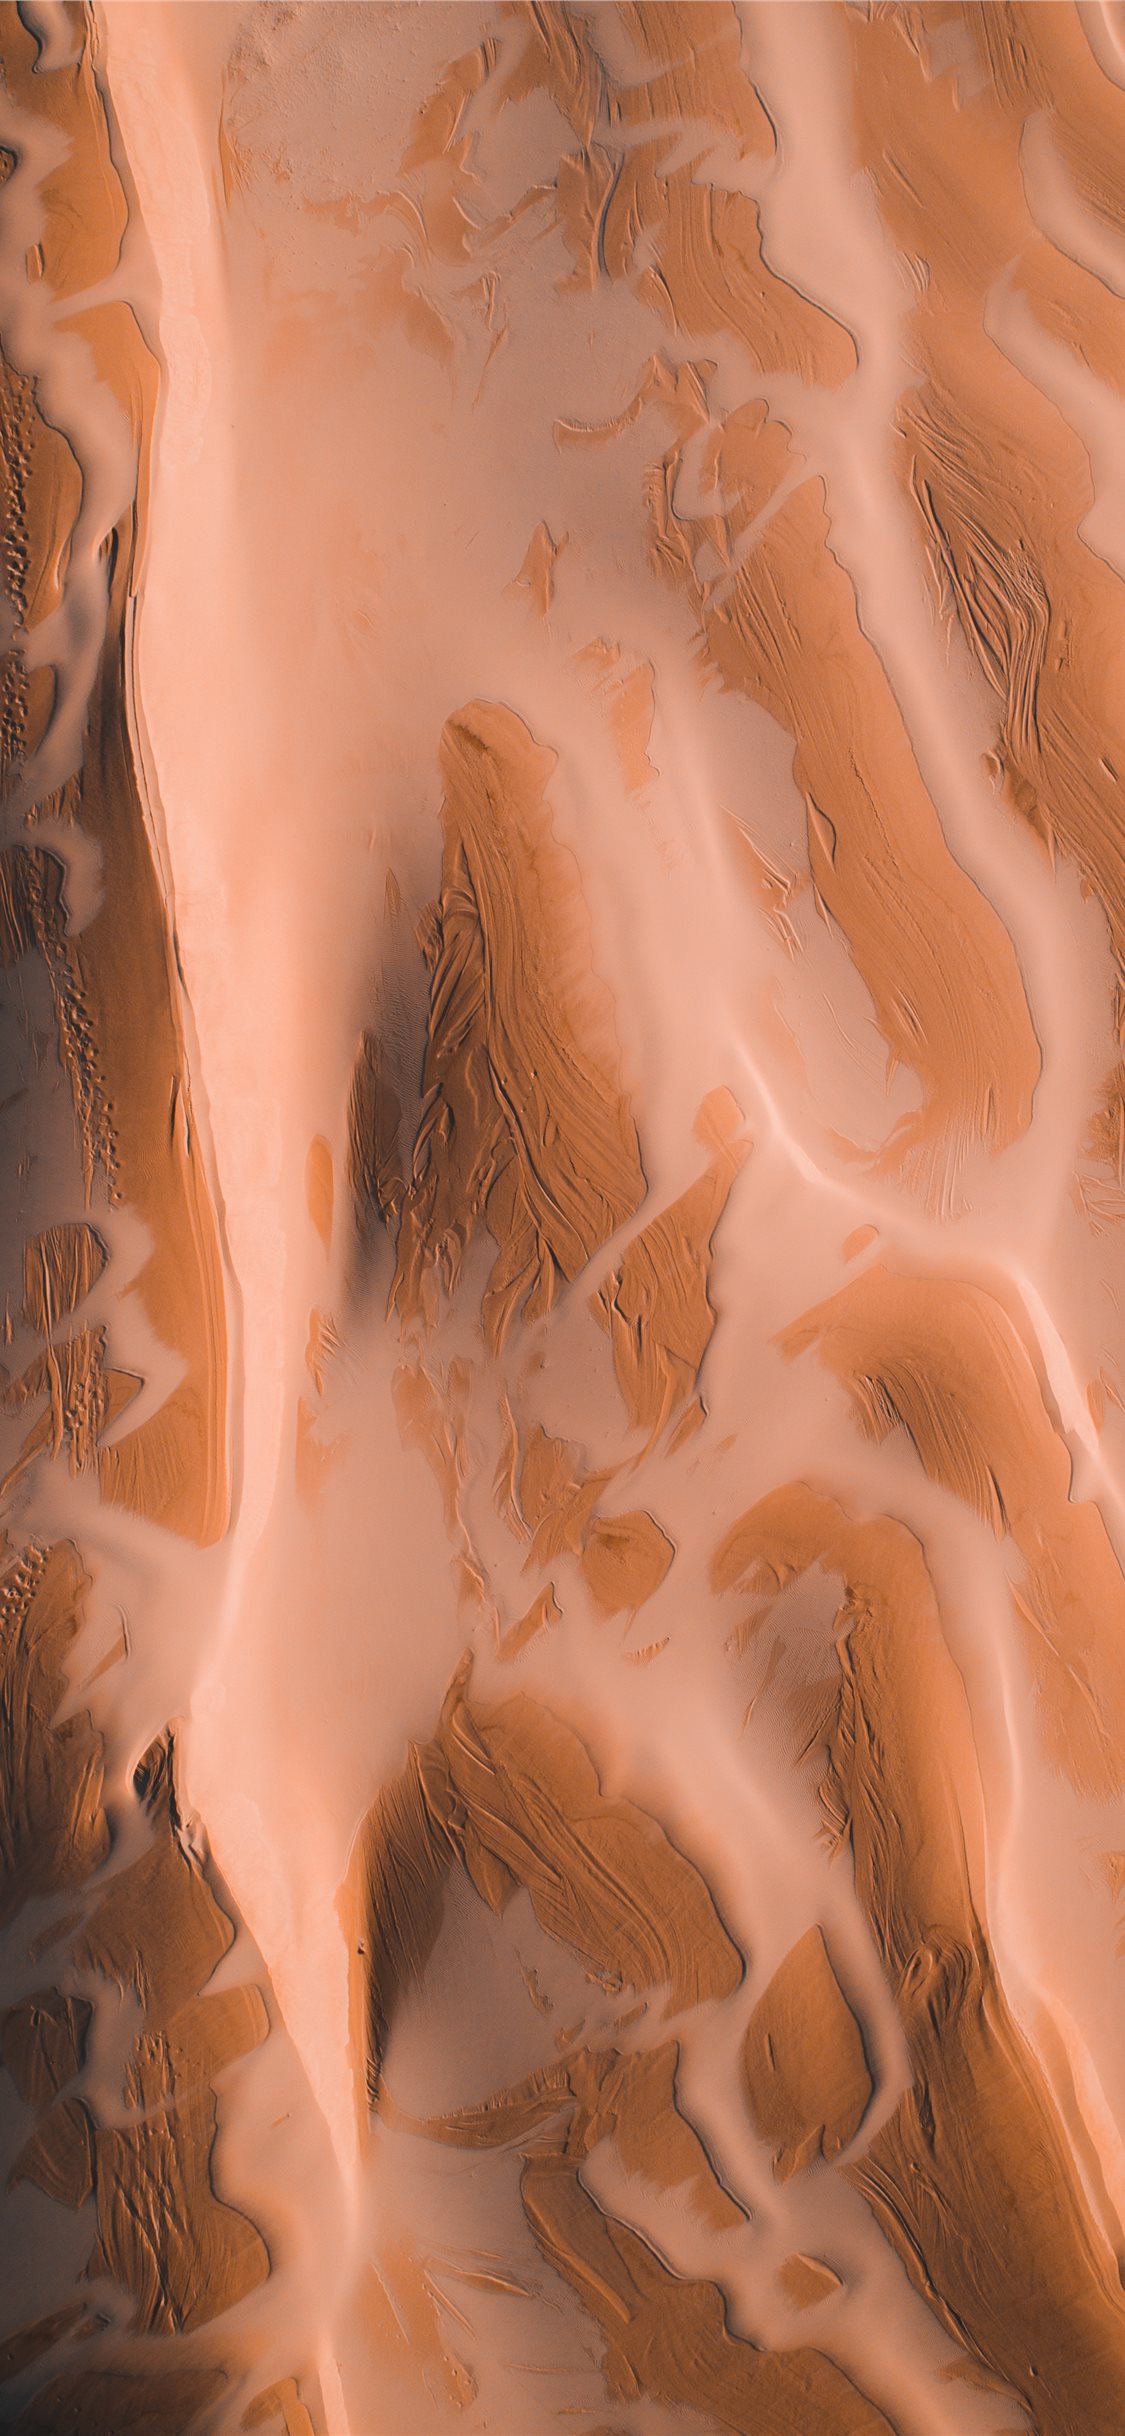 Mars Iphone Wallpapers